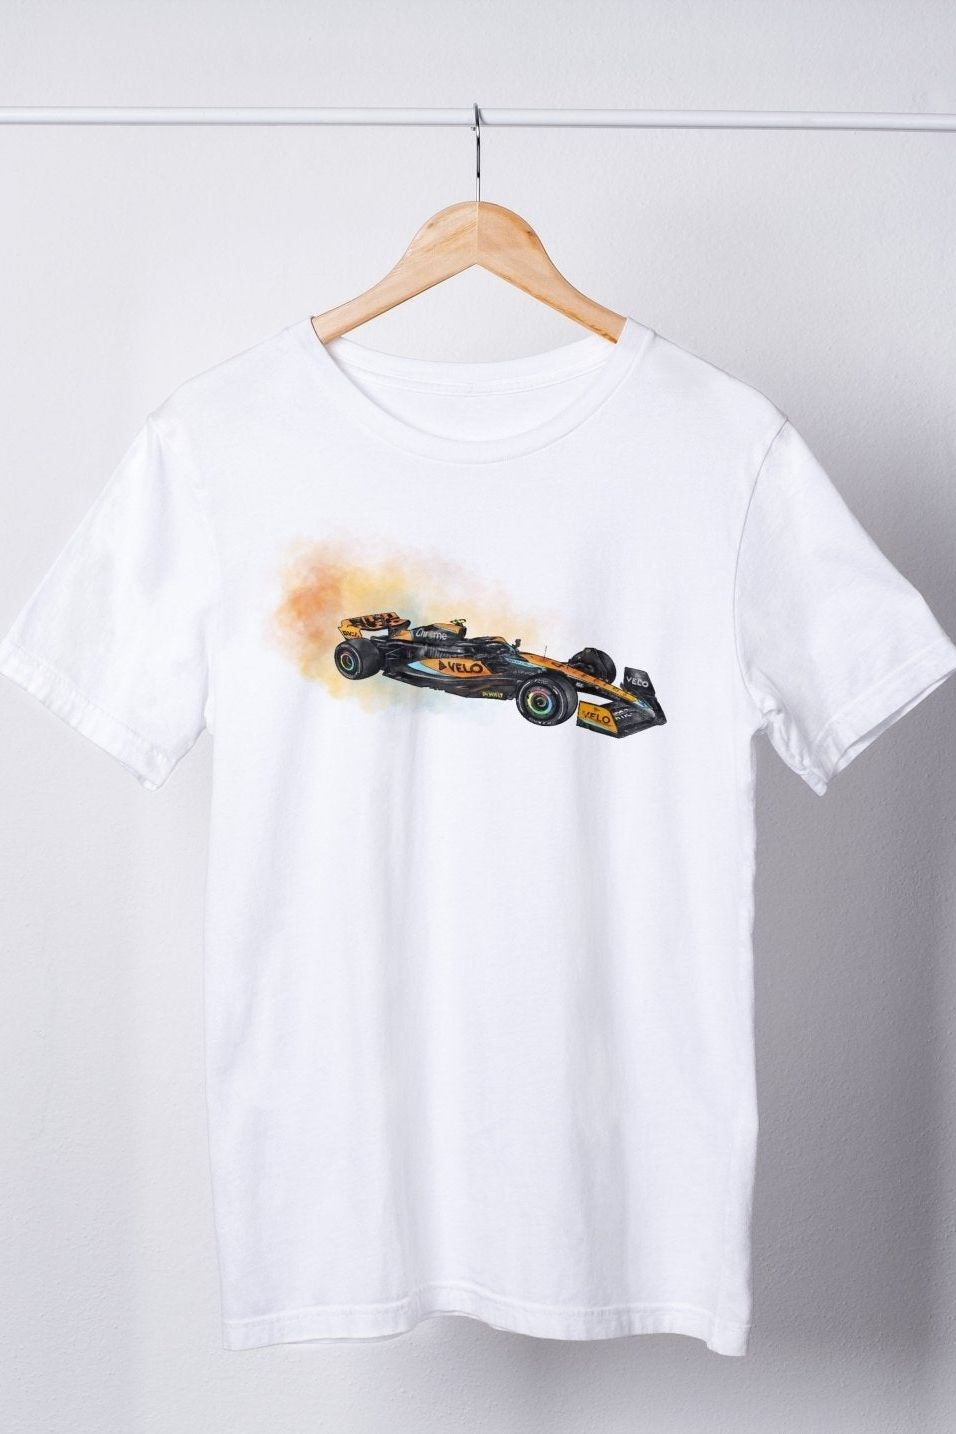 Lando Norris 4 T-Shirt - McLaren F1